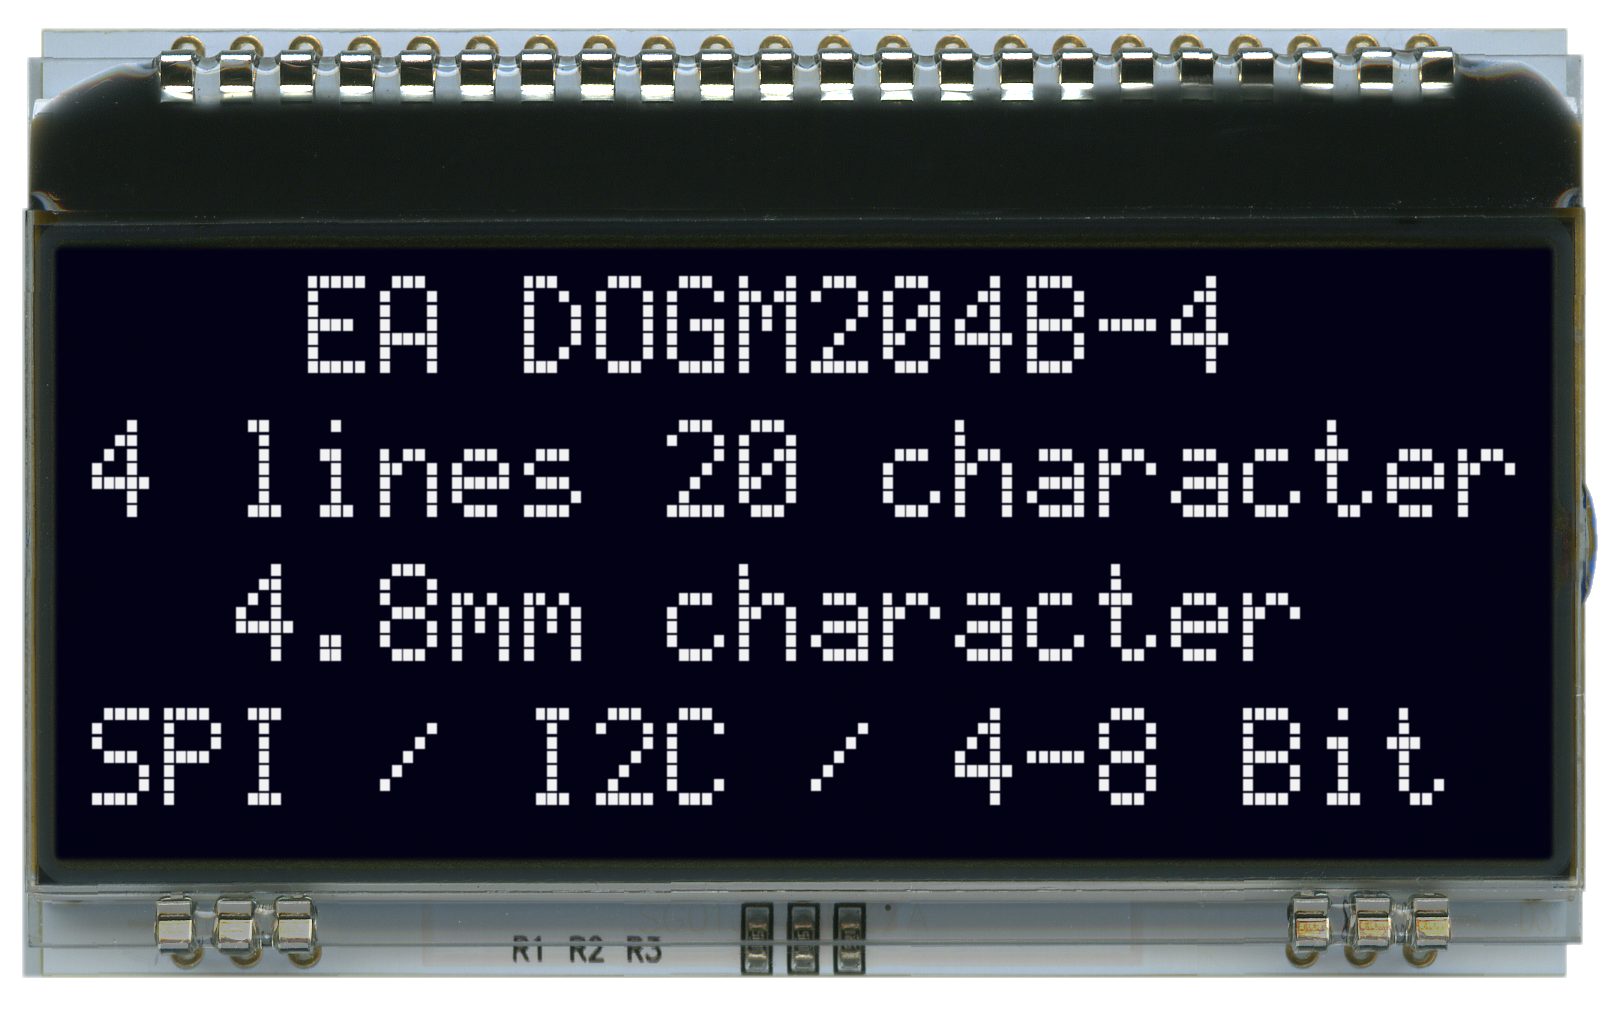 4x20 Character Display EA DOGM204S-A